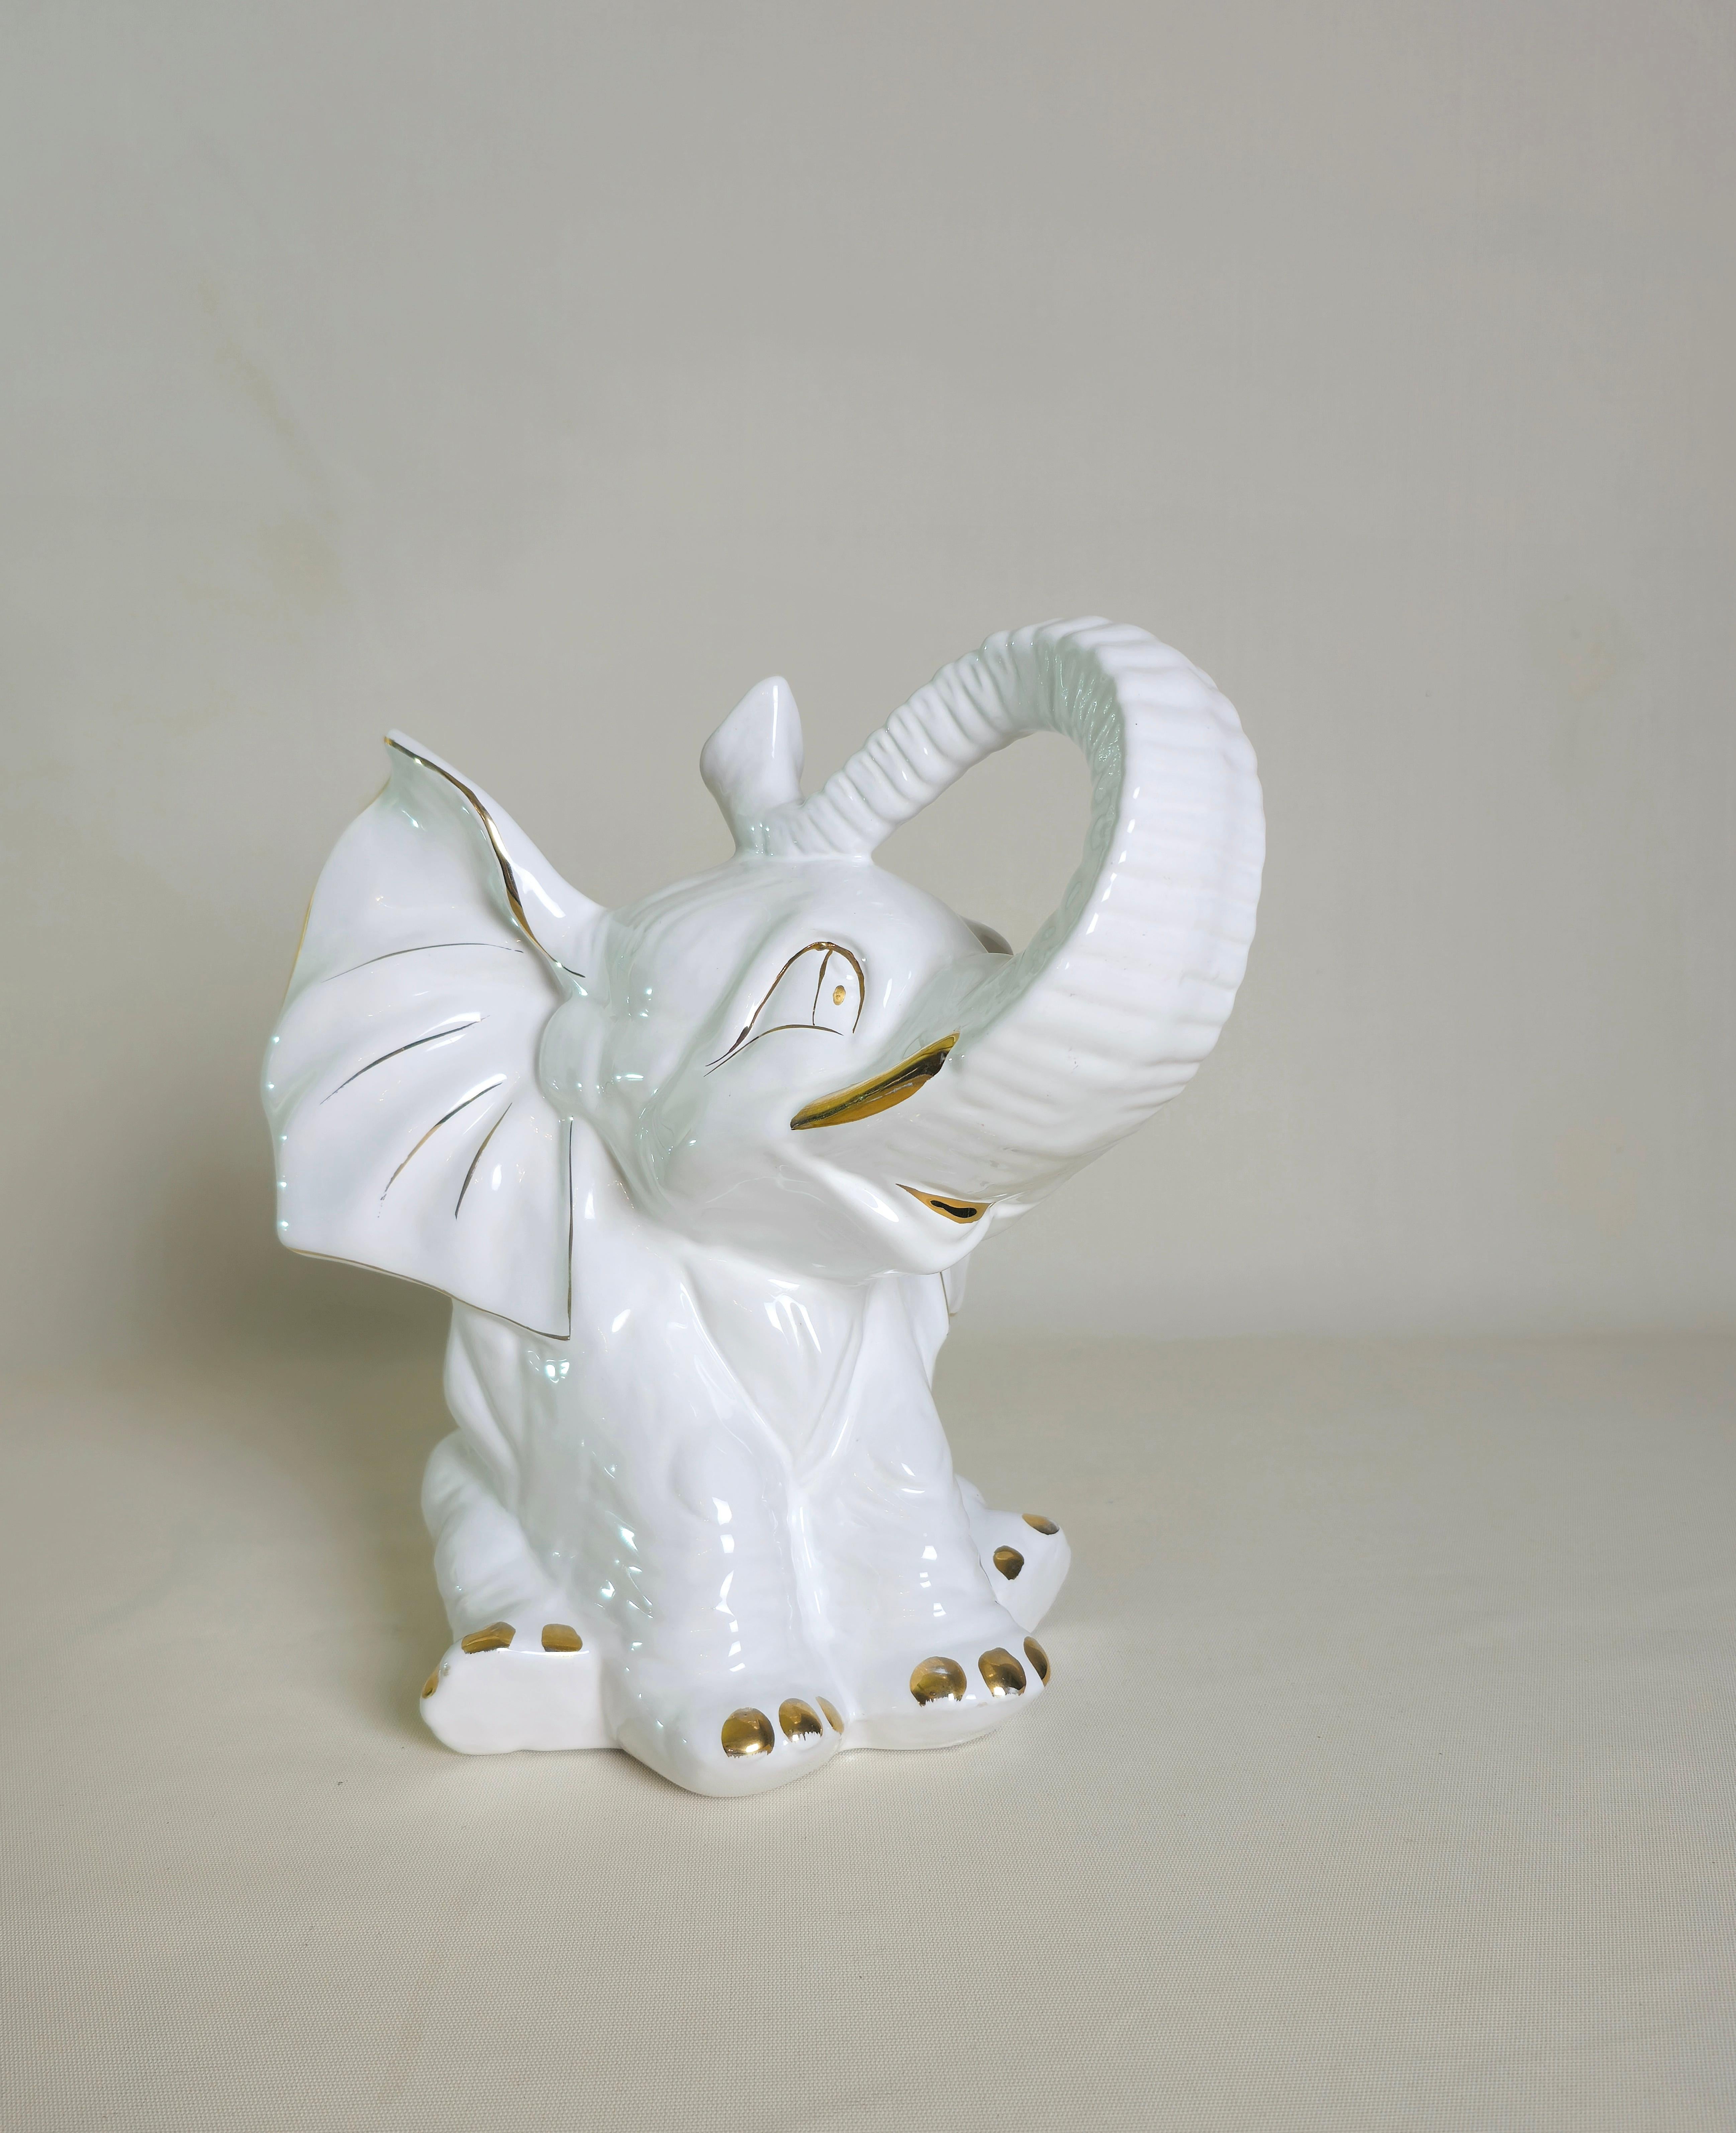 Decorative Object Elephant Porcelain Midcentury Modern Italian Design 1970s For Sale 2